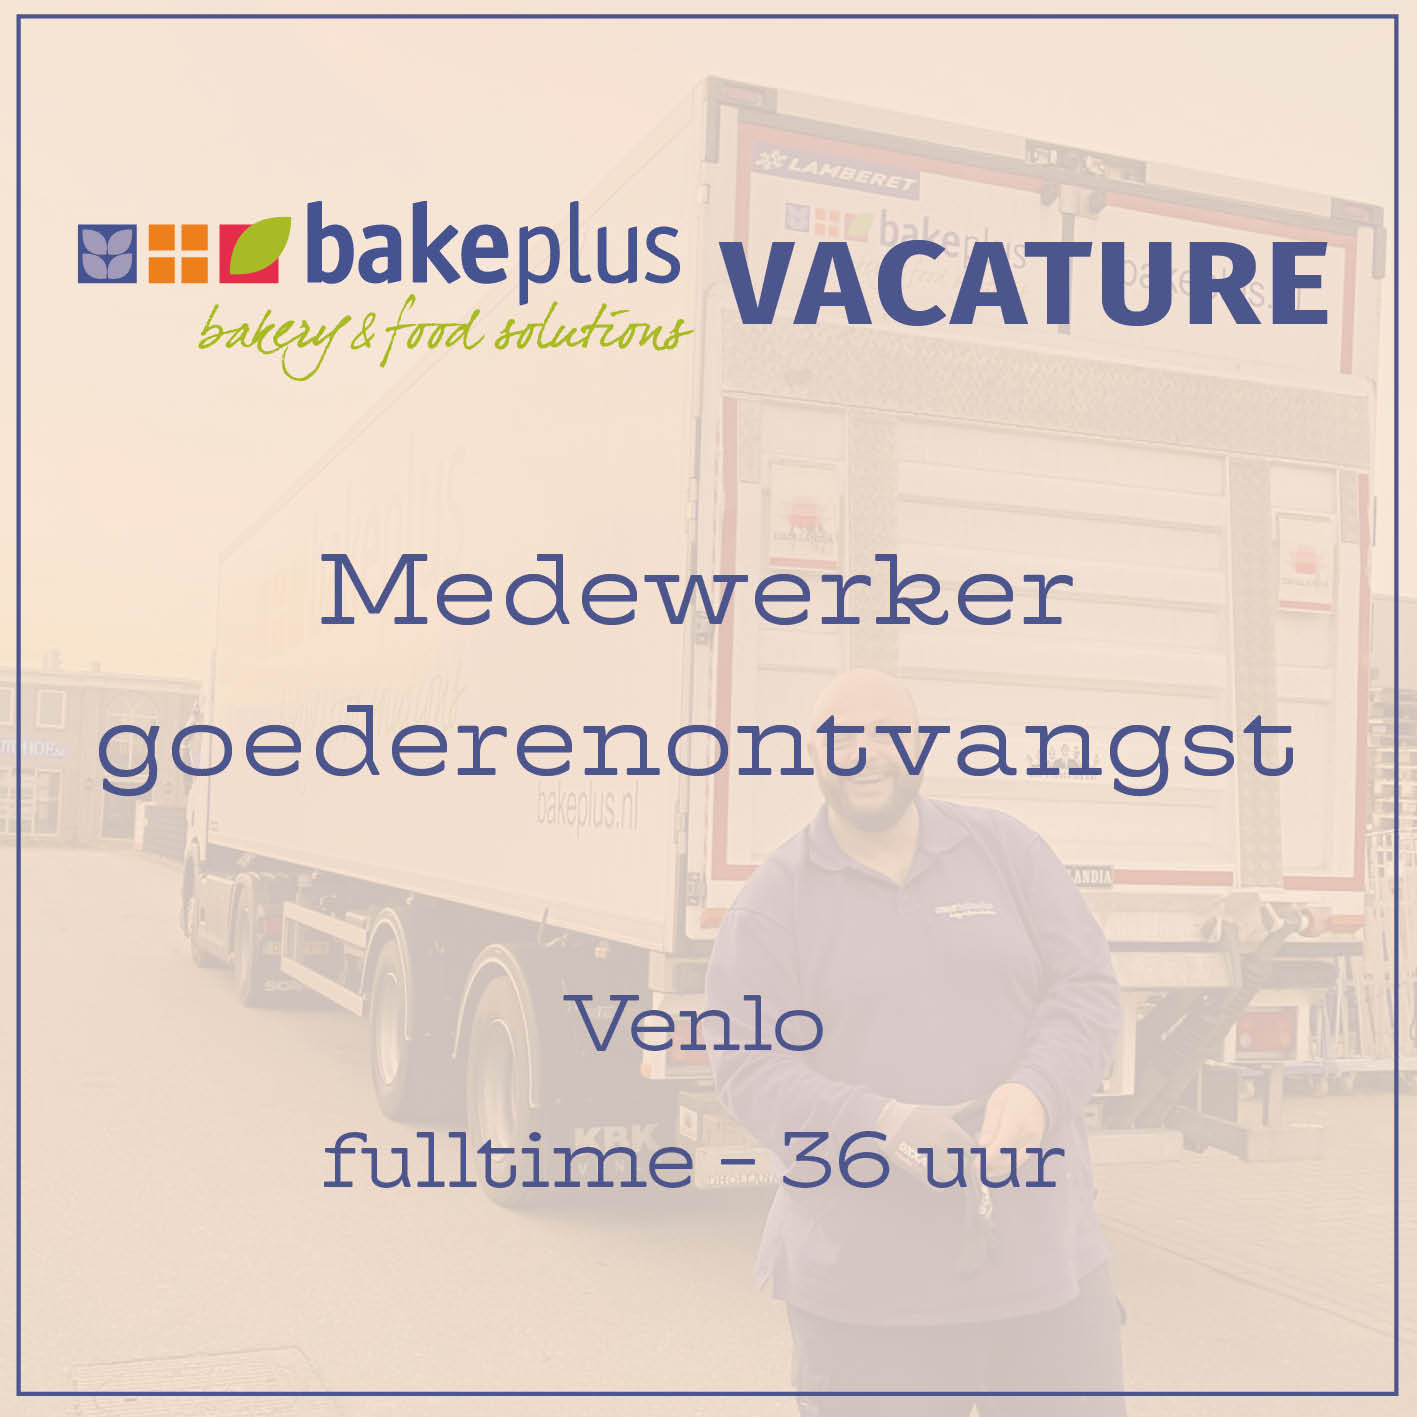 Bakeplus_vacature_medw._goederenontvangst_Venlo.jpg